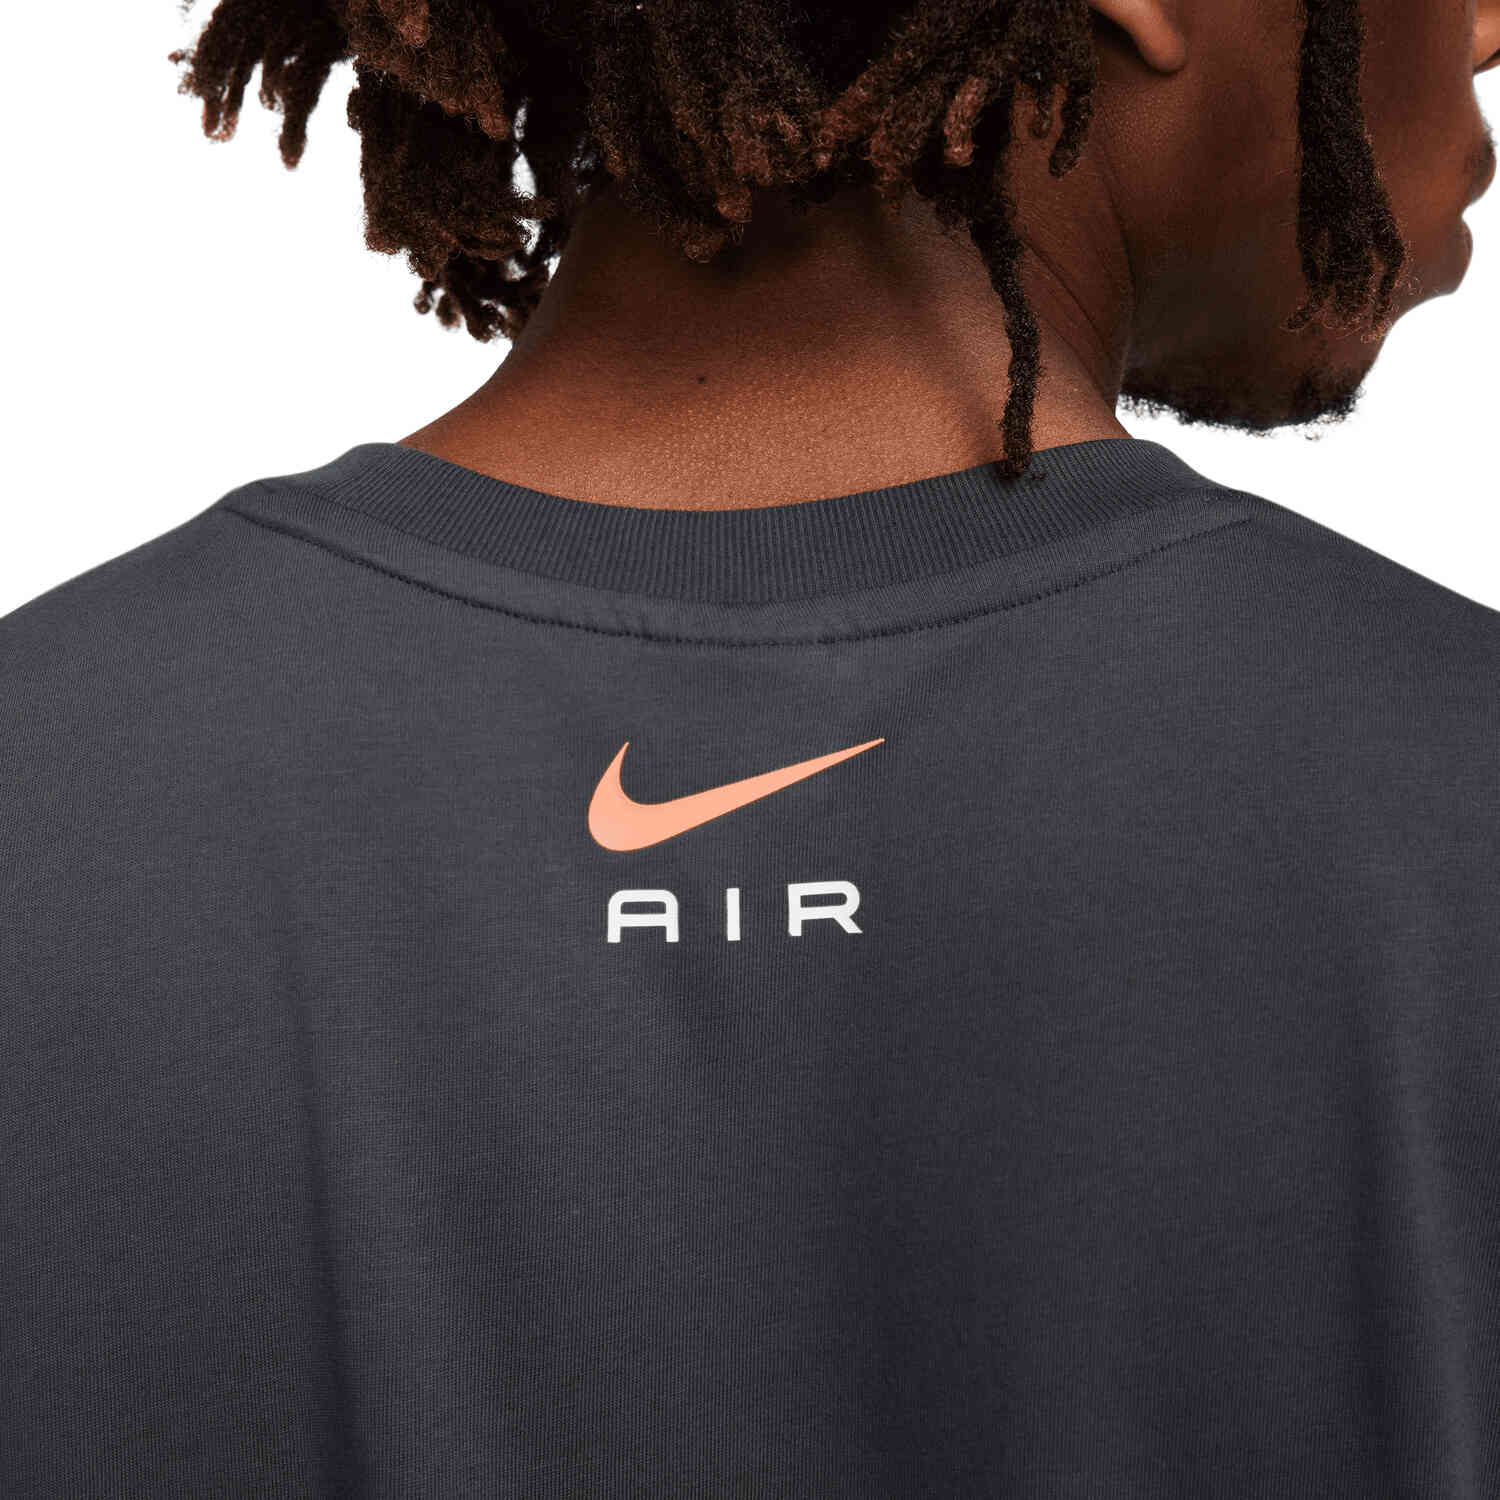 Nike Air x Marcus Rashford T-shirt - Anthracite - SoccerPro